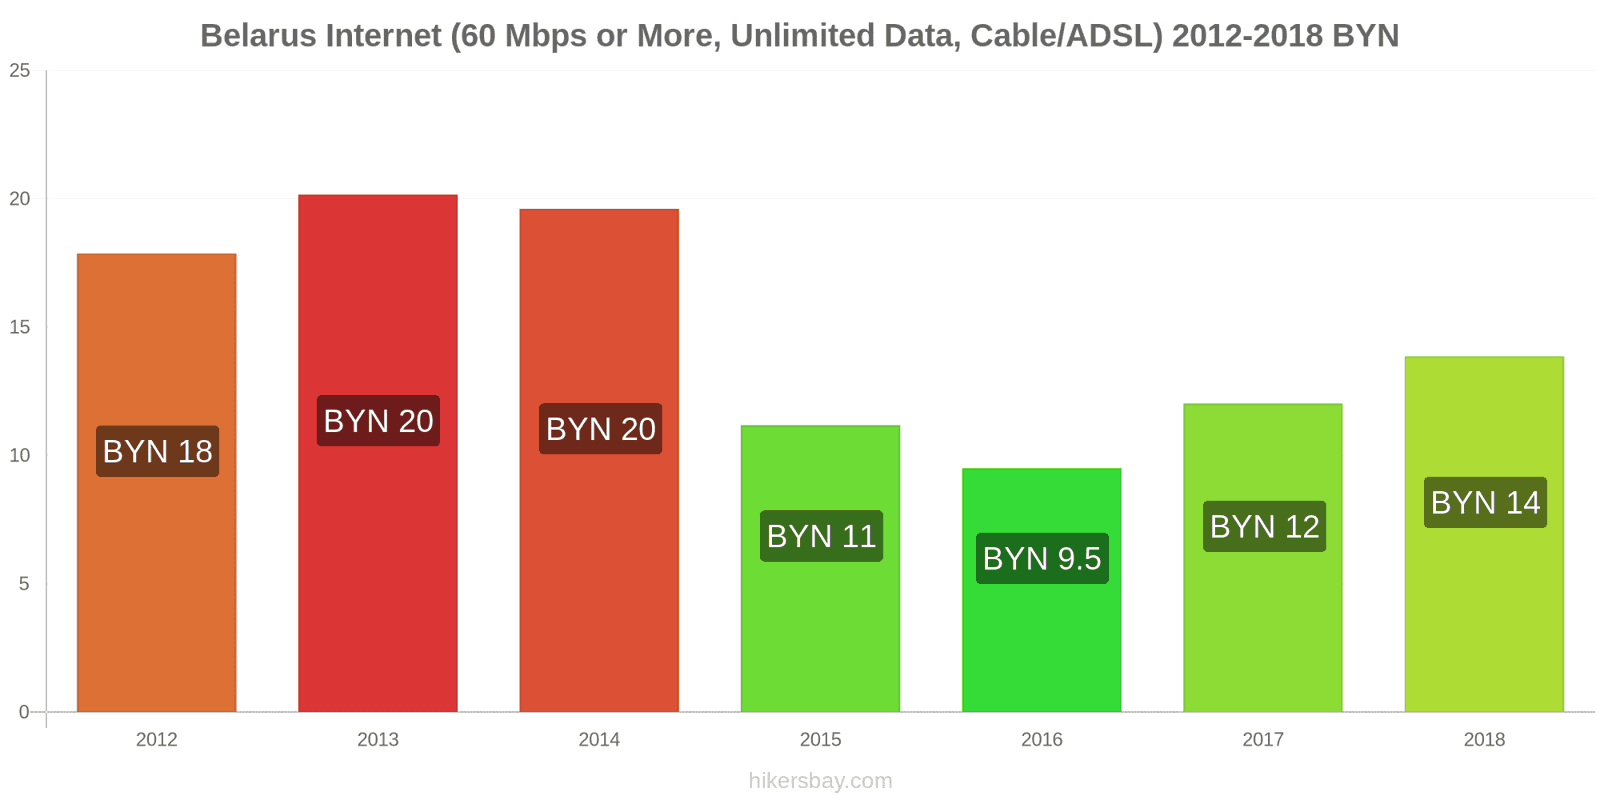 Belarus price changes Internet (60 Mbps or more, unlimited data, cable/ADSL) hikersbay.com